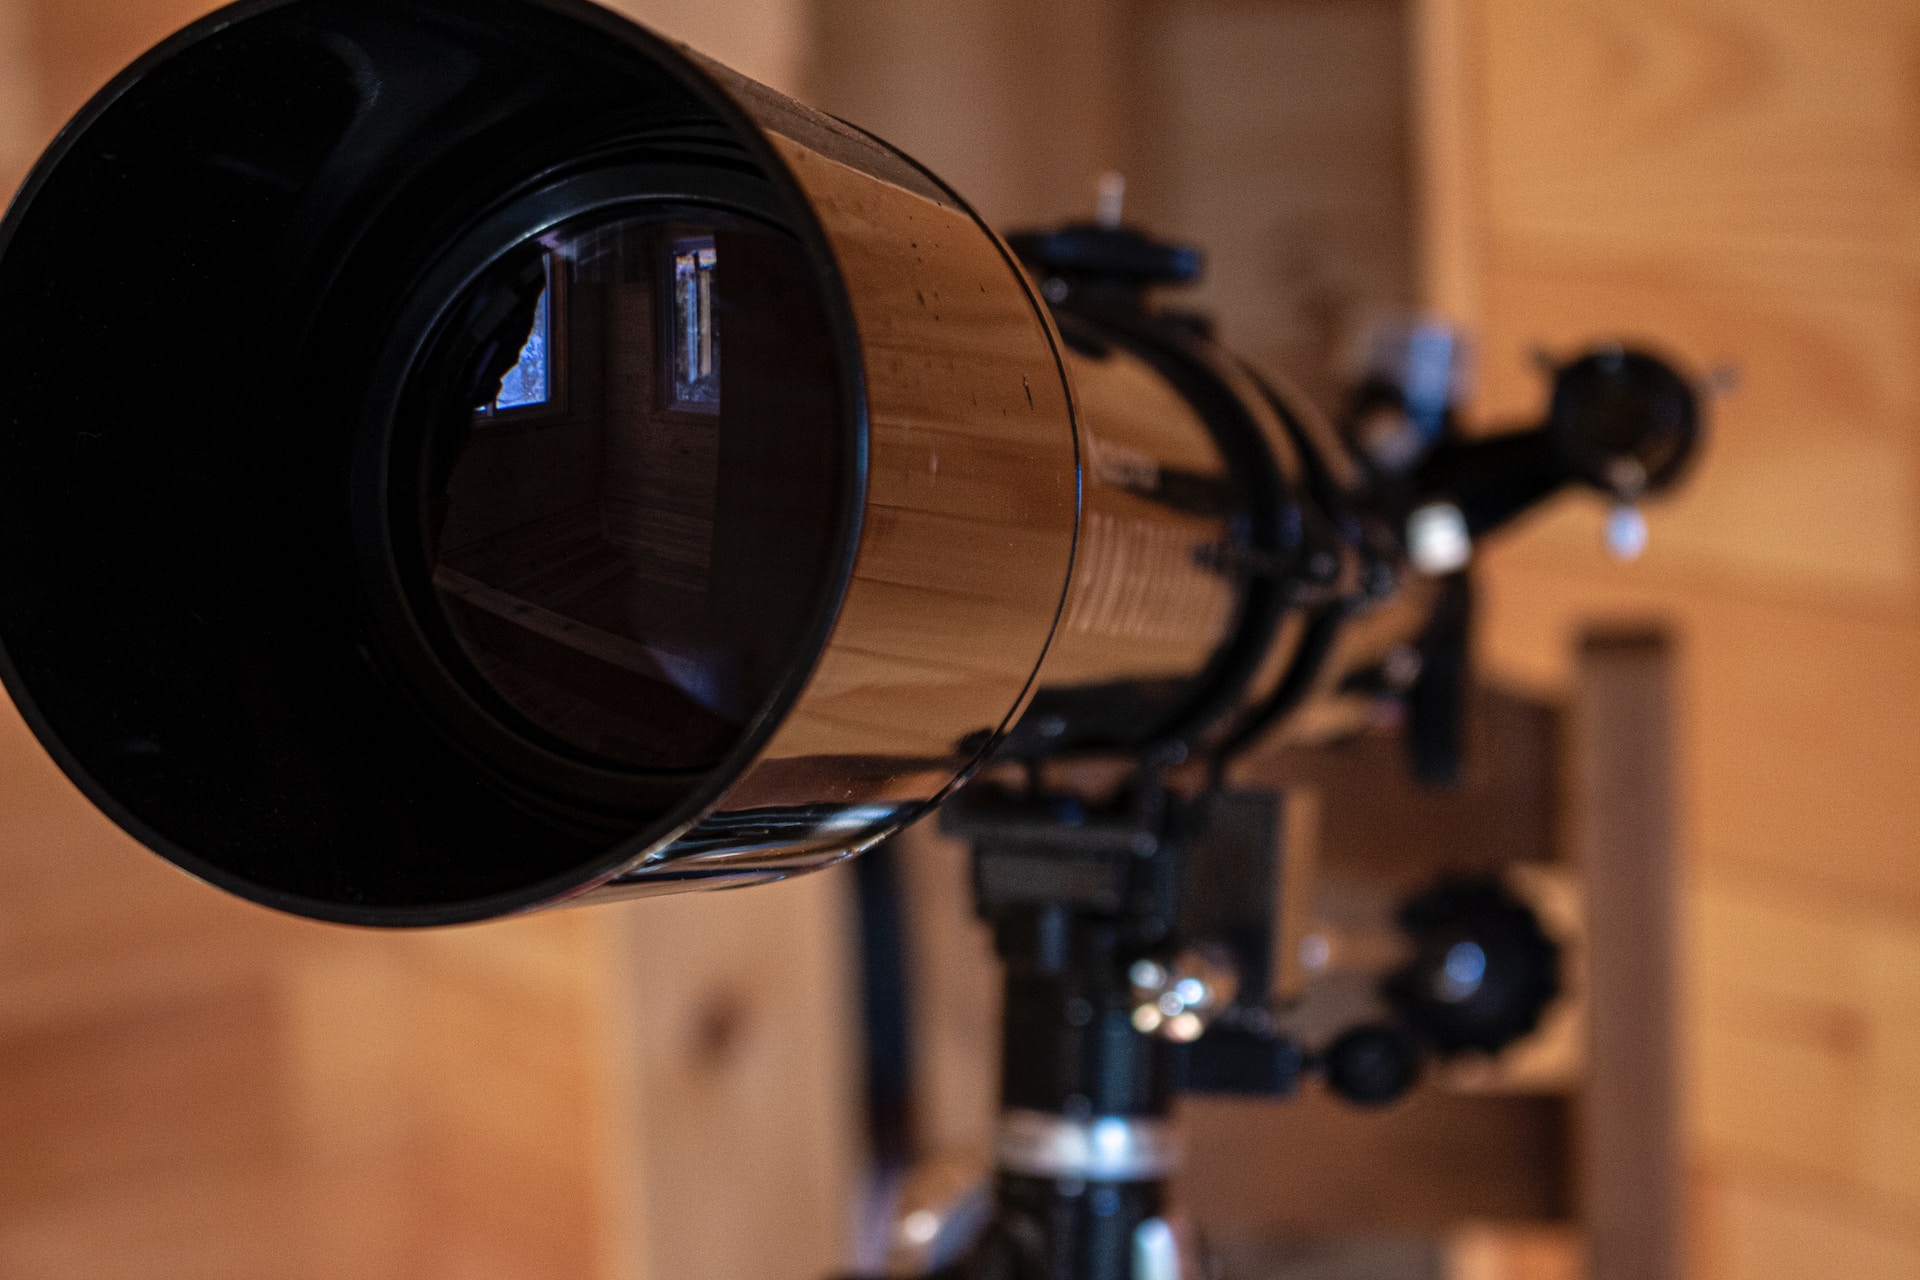 objective lens on a telescope